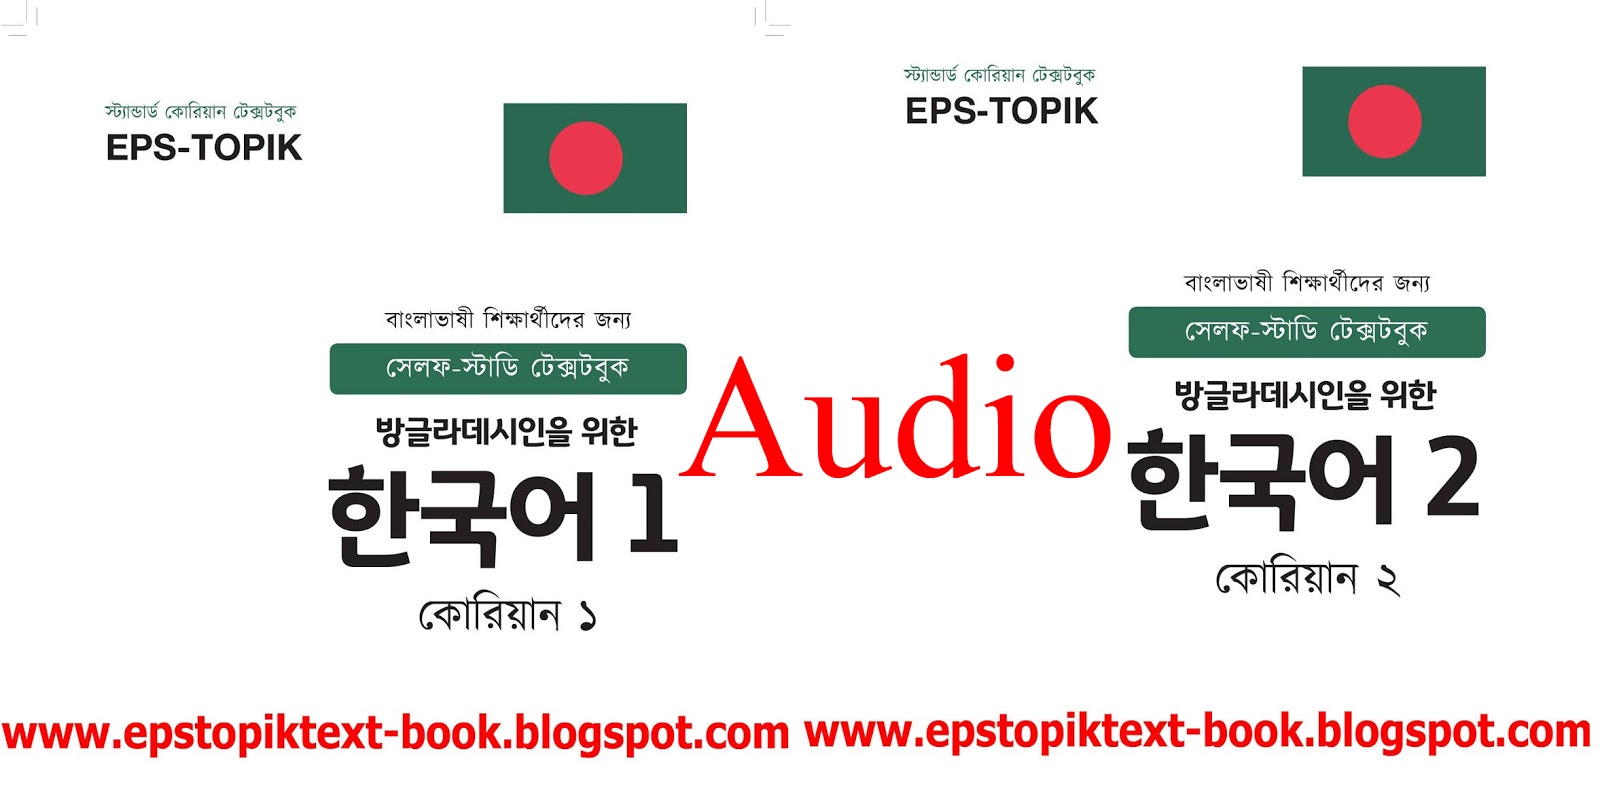 Self-Study EPS TOPIK Text Book Lesson 01-60 Audio Download - EPS